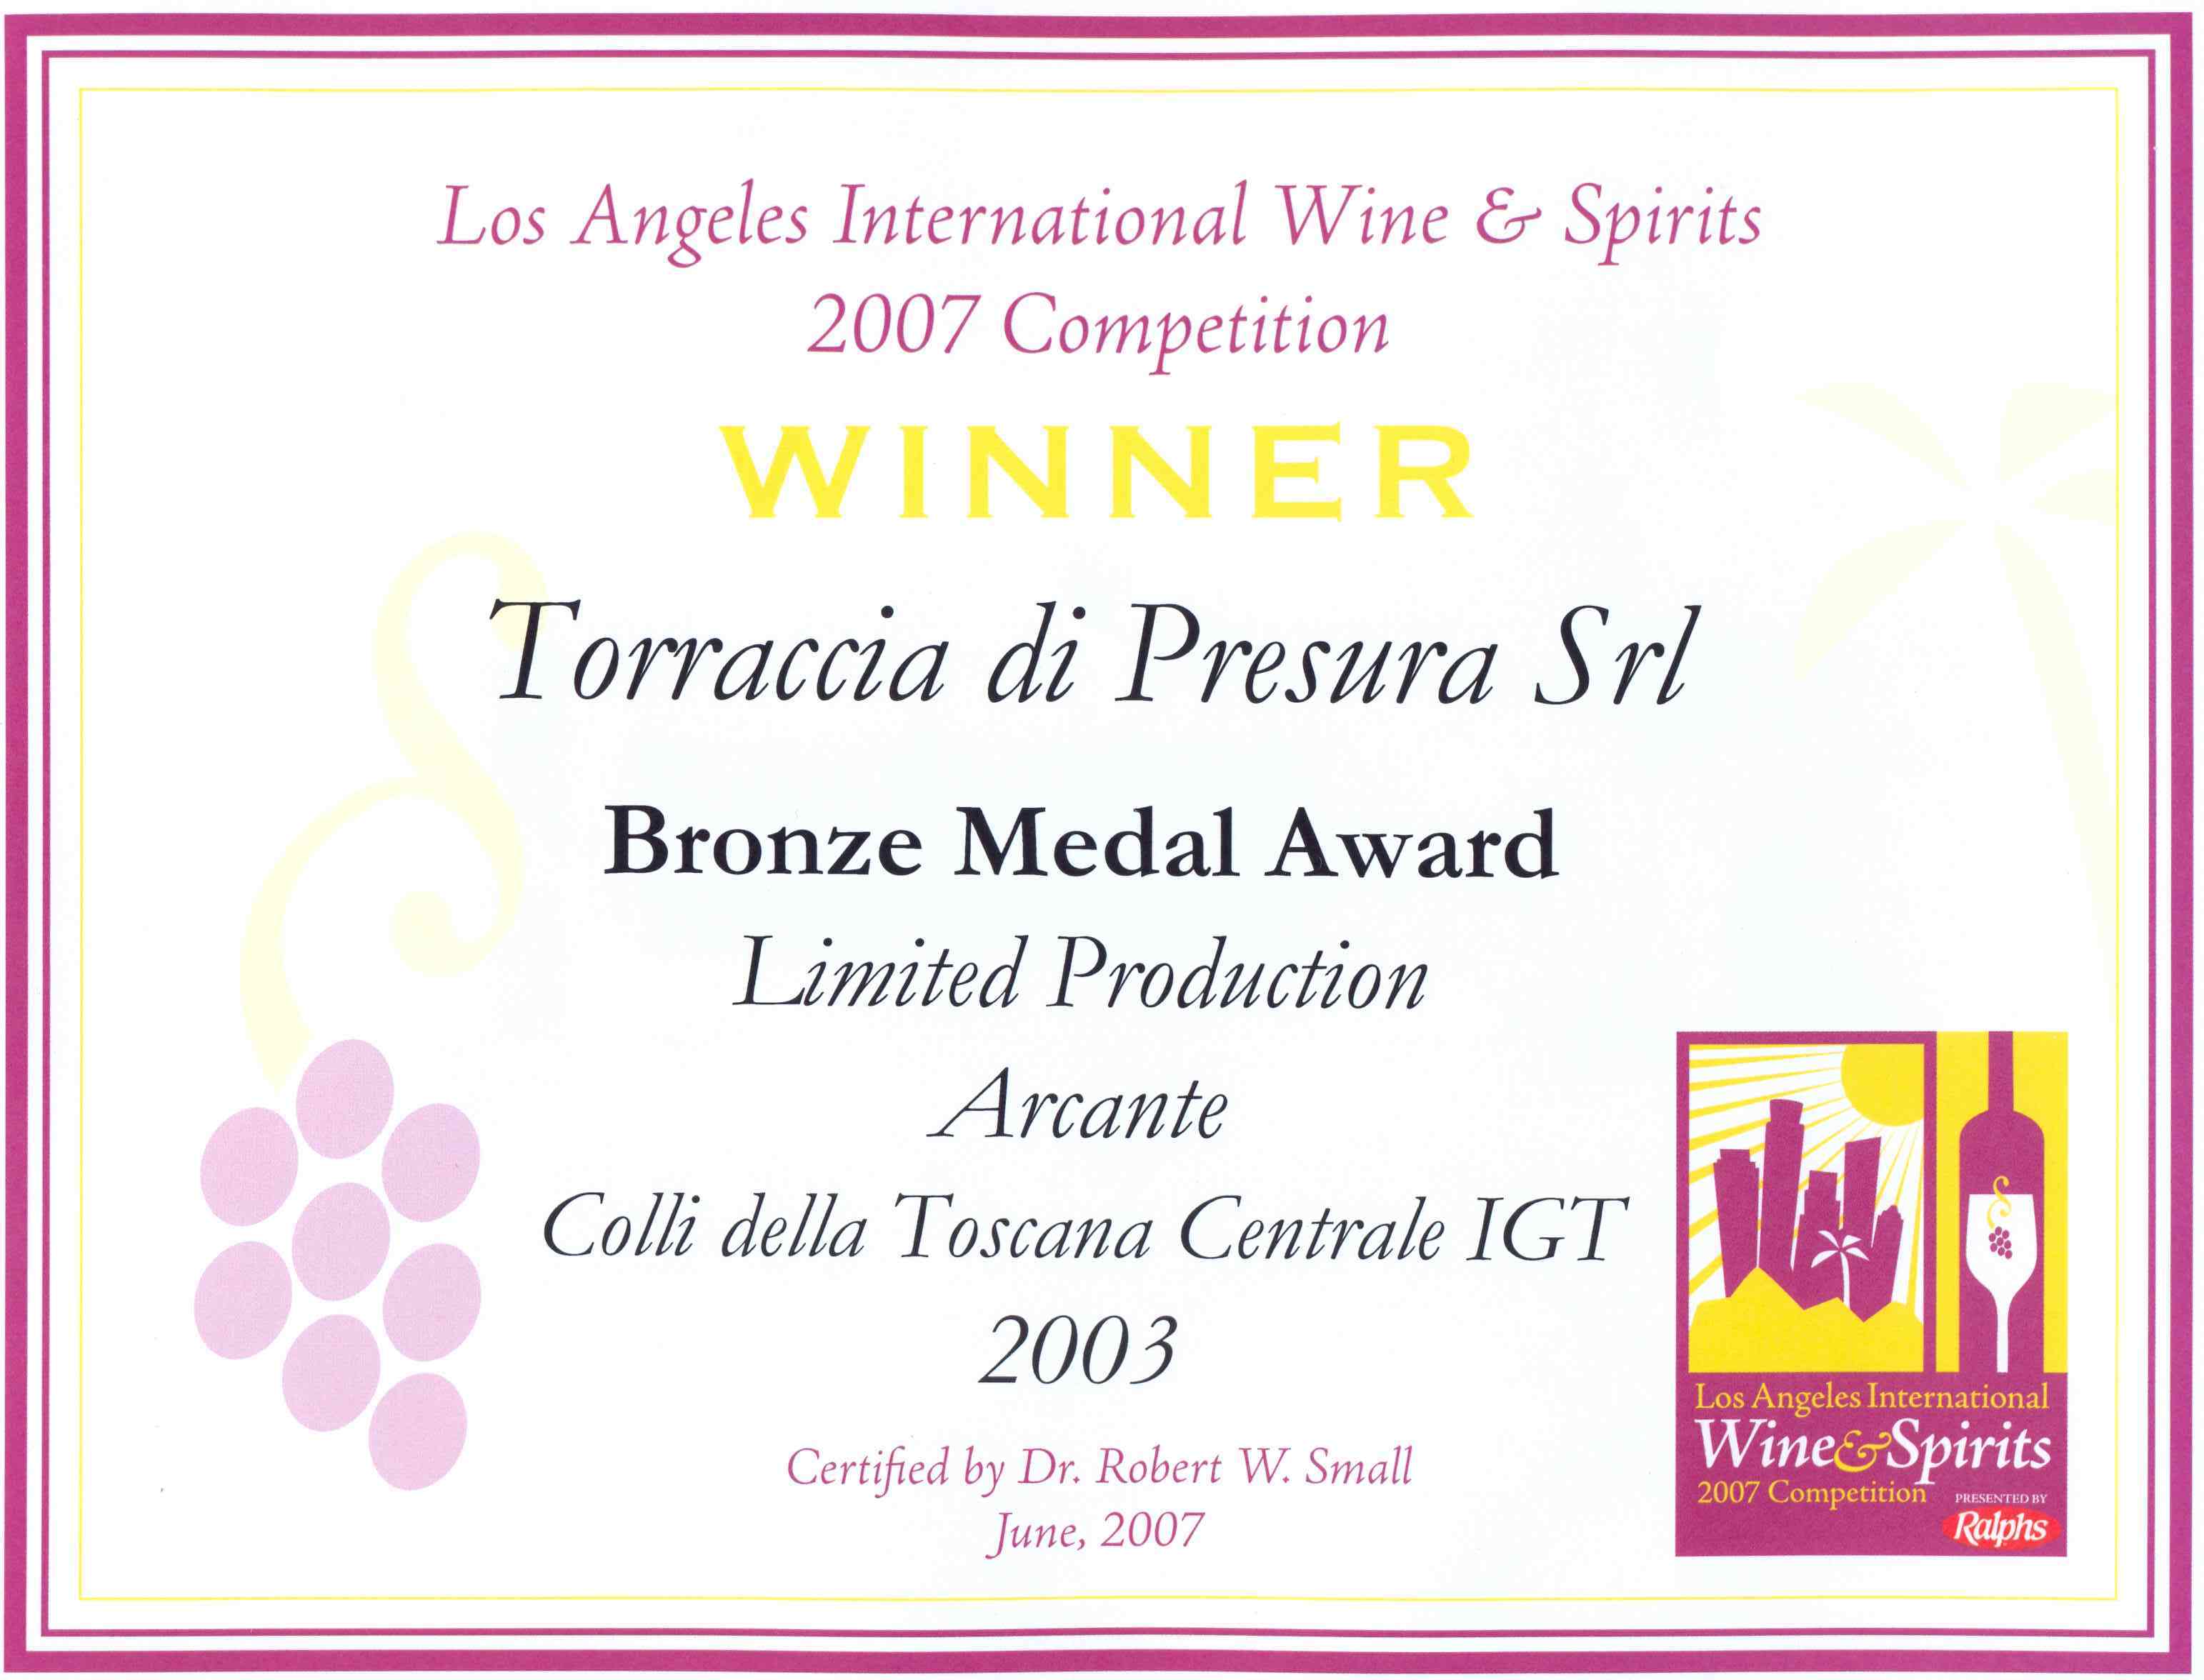 47 ARC 2003 LA Intl Wine Competition 2007 2007